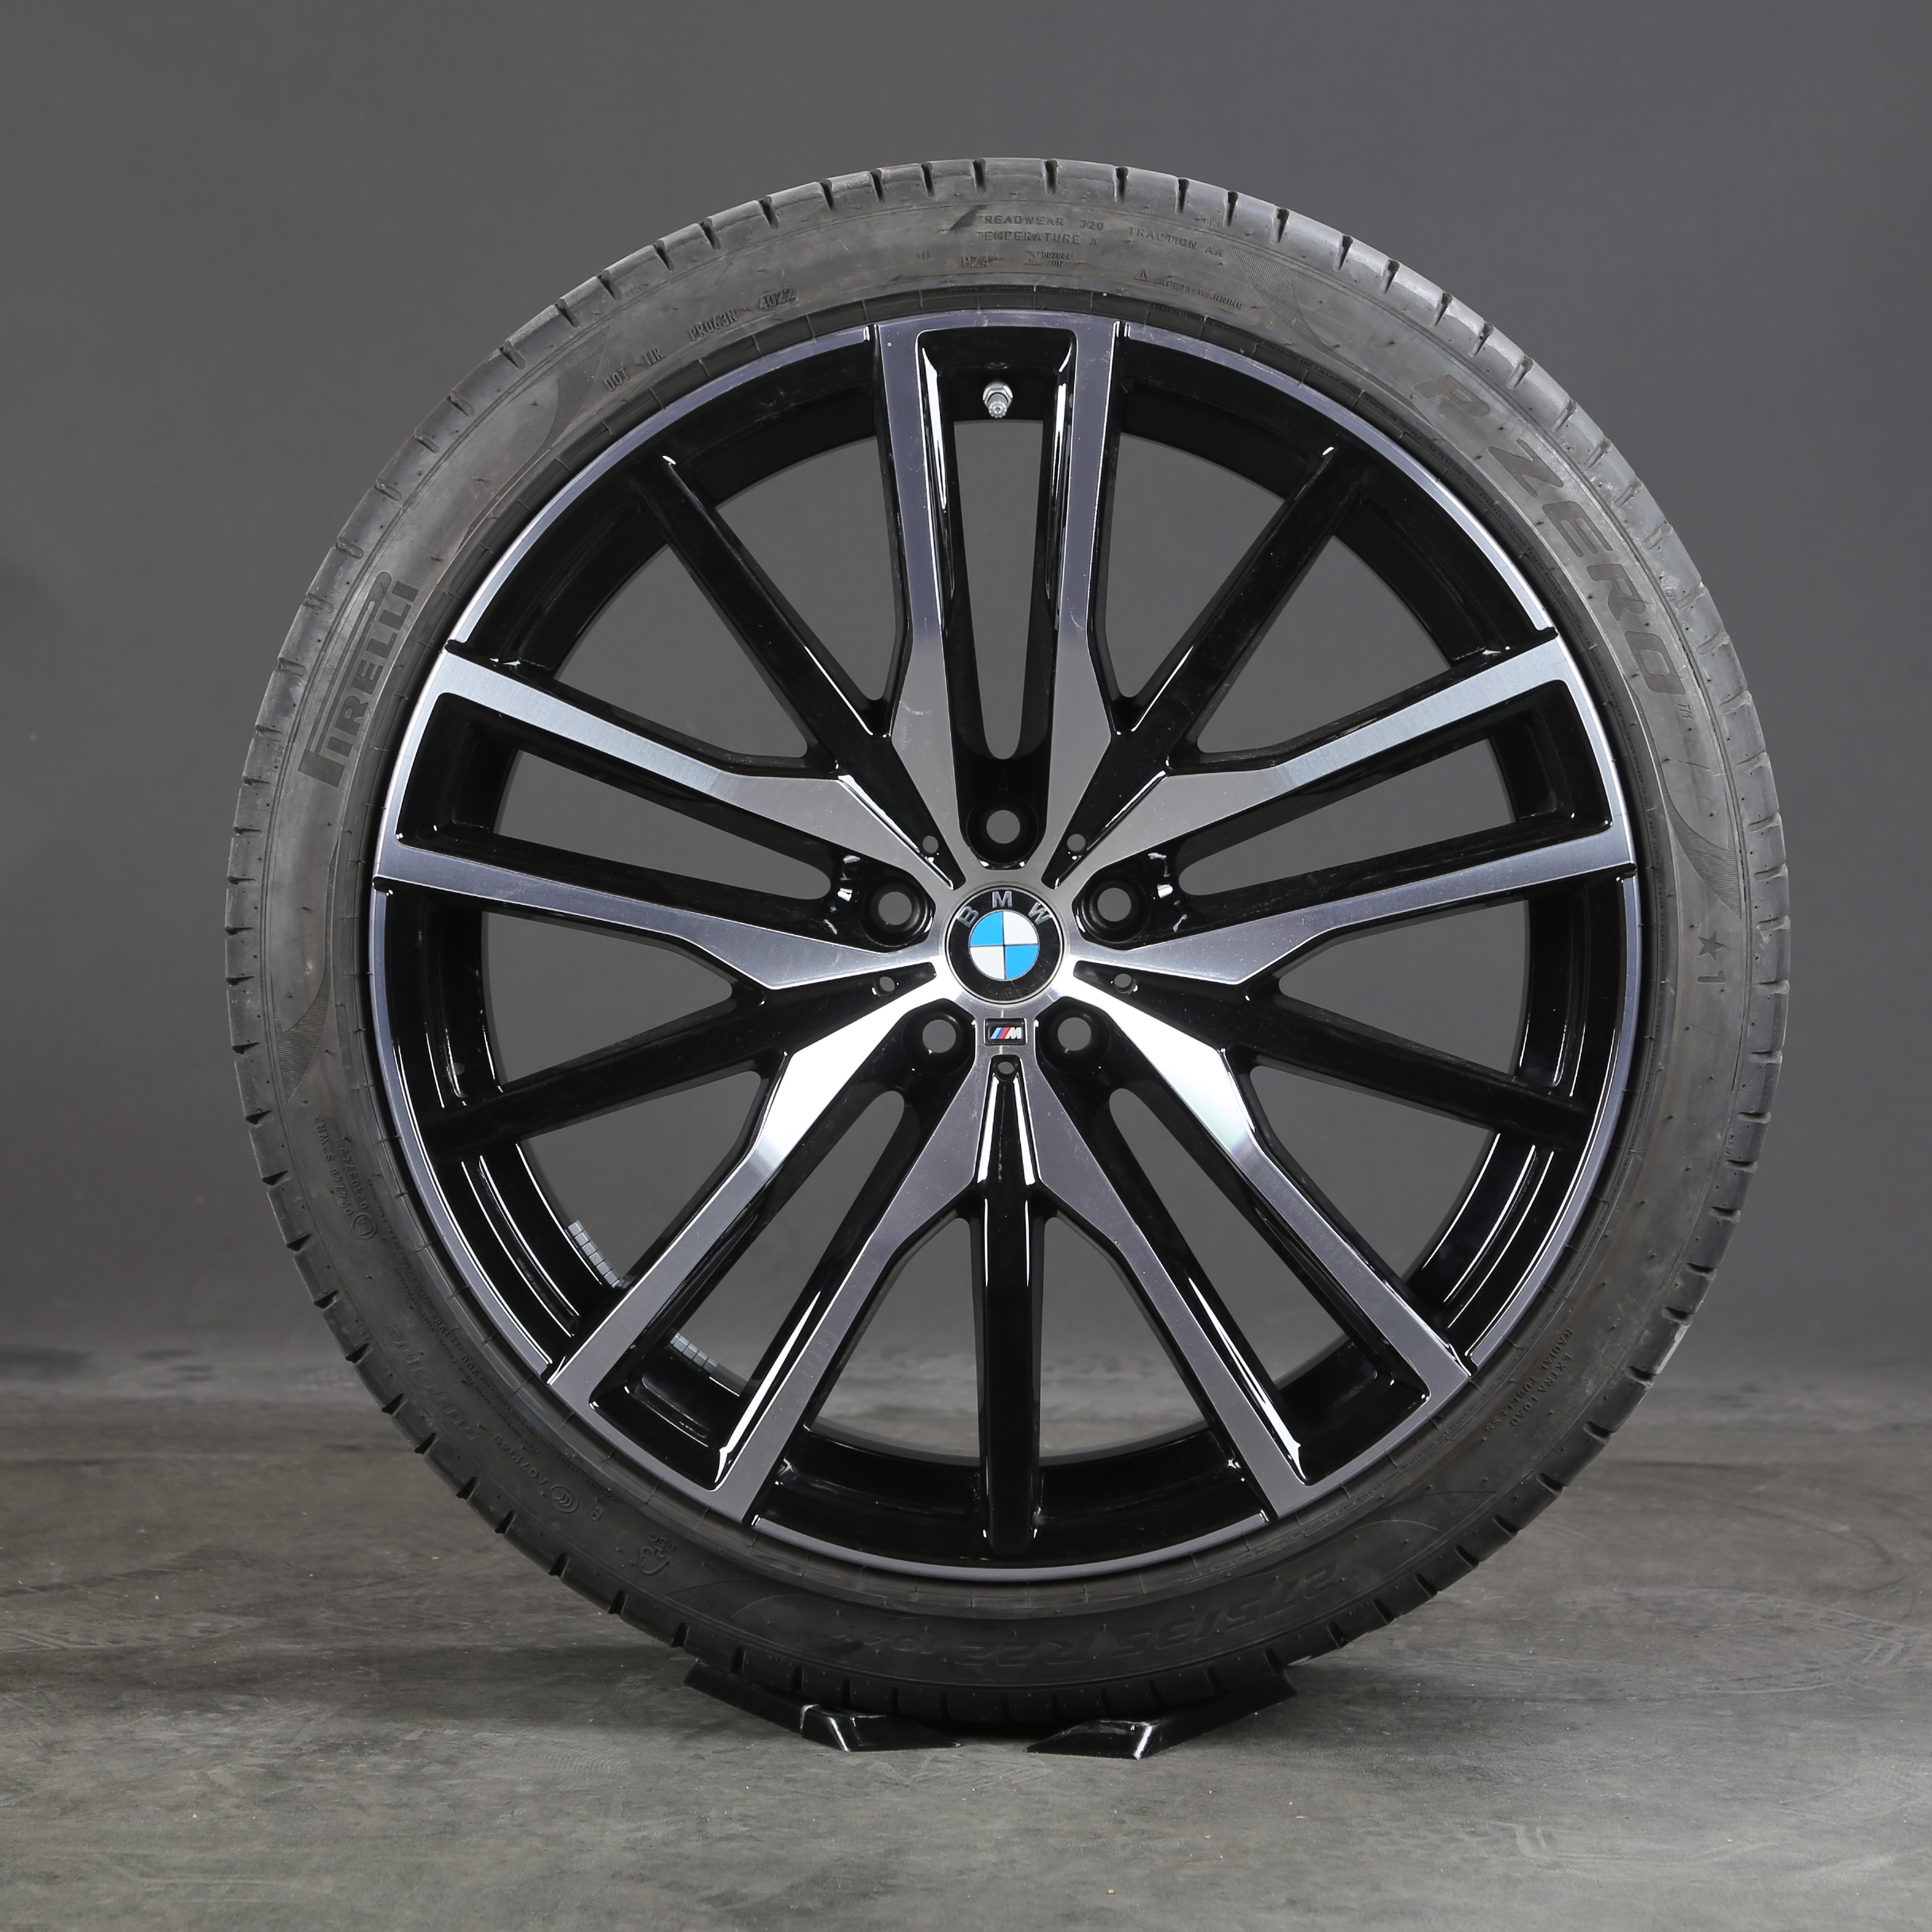 BMW X5 G05 X6 G06 original 22 inch summer wheels M742 8090013 summer tires